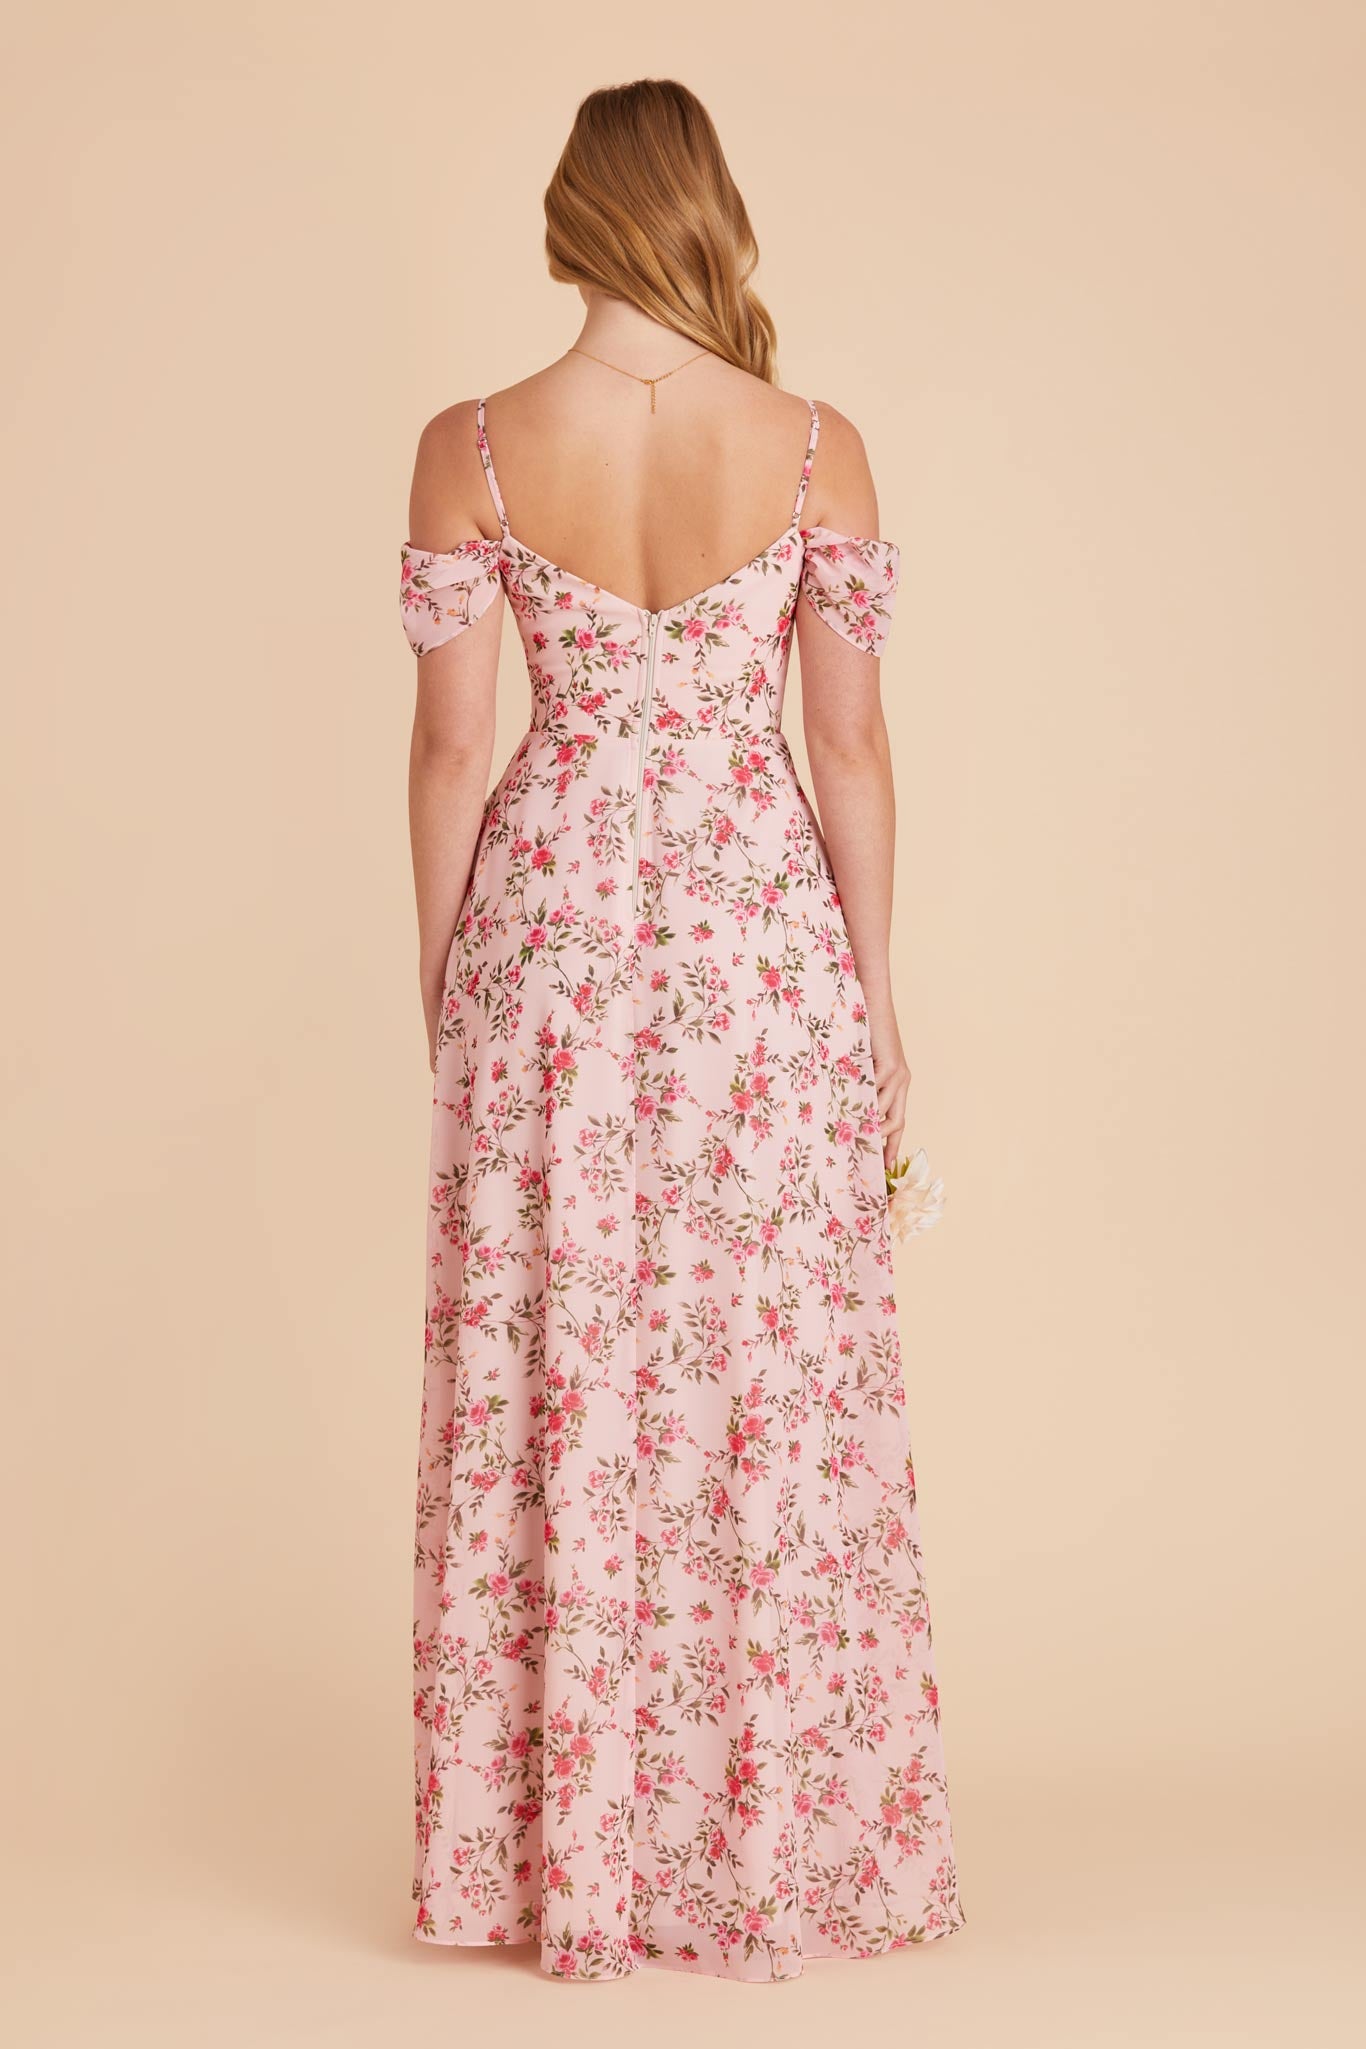 Wild Rose Garden Devin Convertible Dress by Birdy Grey